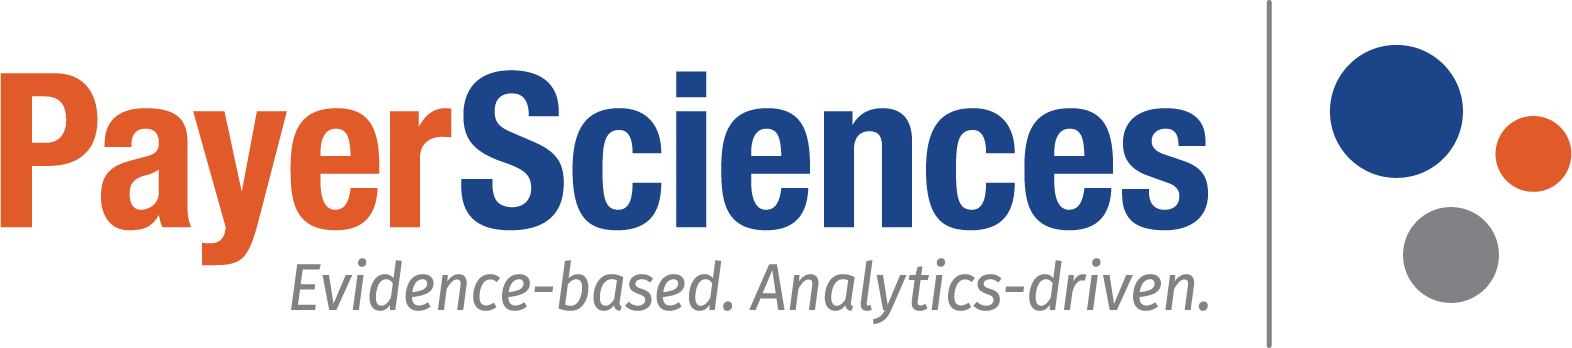 new logo payer sciences